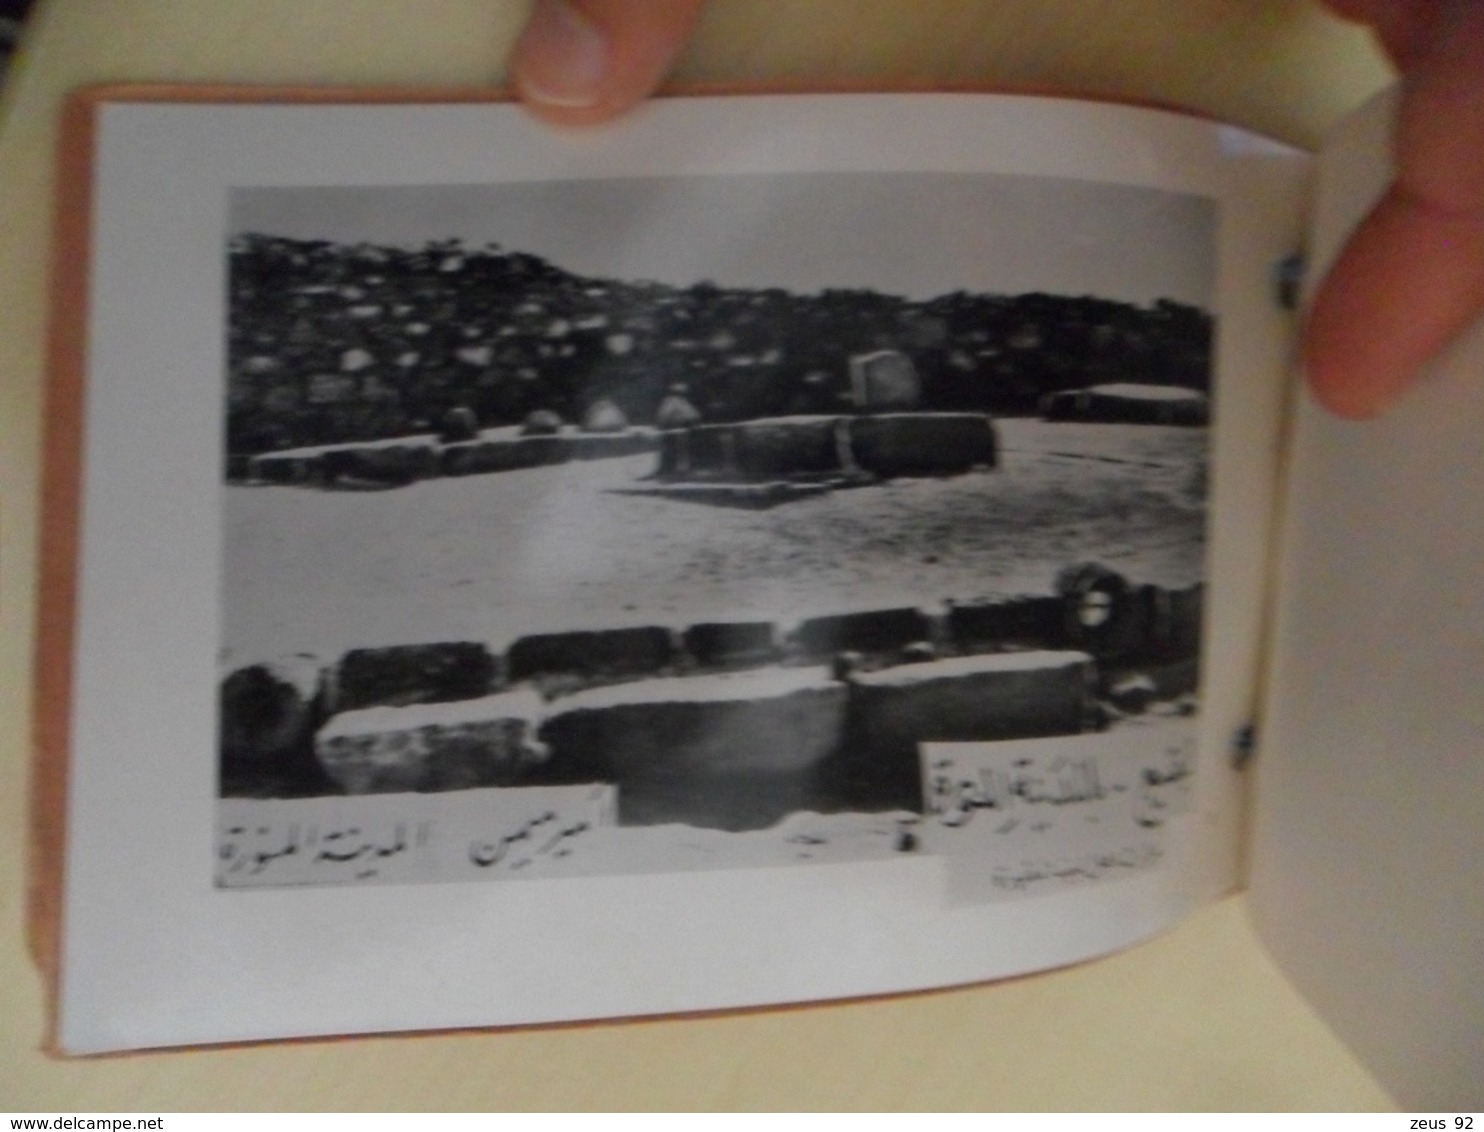 SAUDI ARABIA - ALBUM VINTAGE 24 OLD PHOTOS PICTURES OF LA MECCA AND MEDINA VIEW SCAN